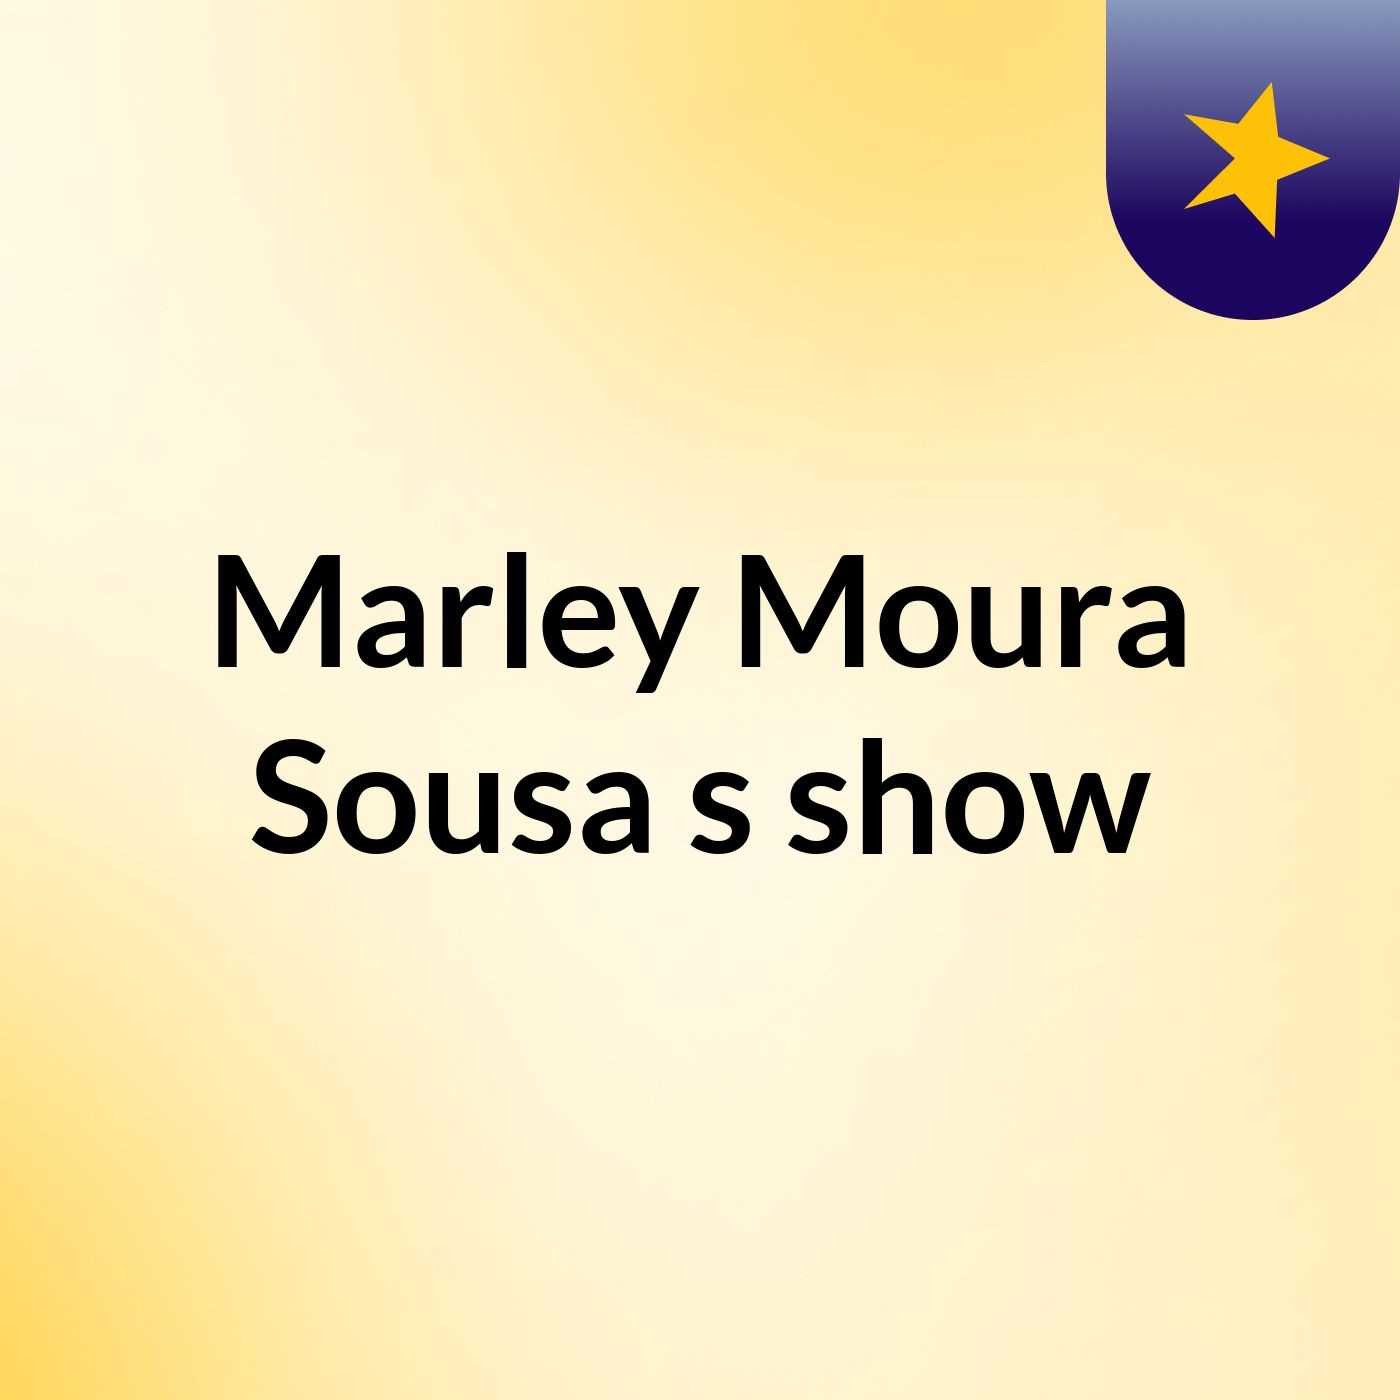 Marley Moura Sousa's show